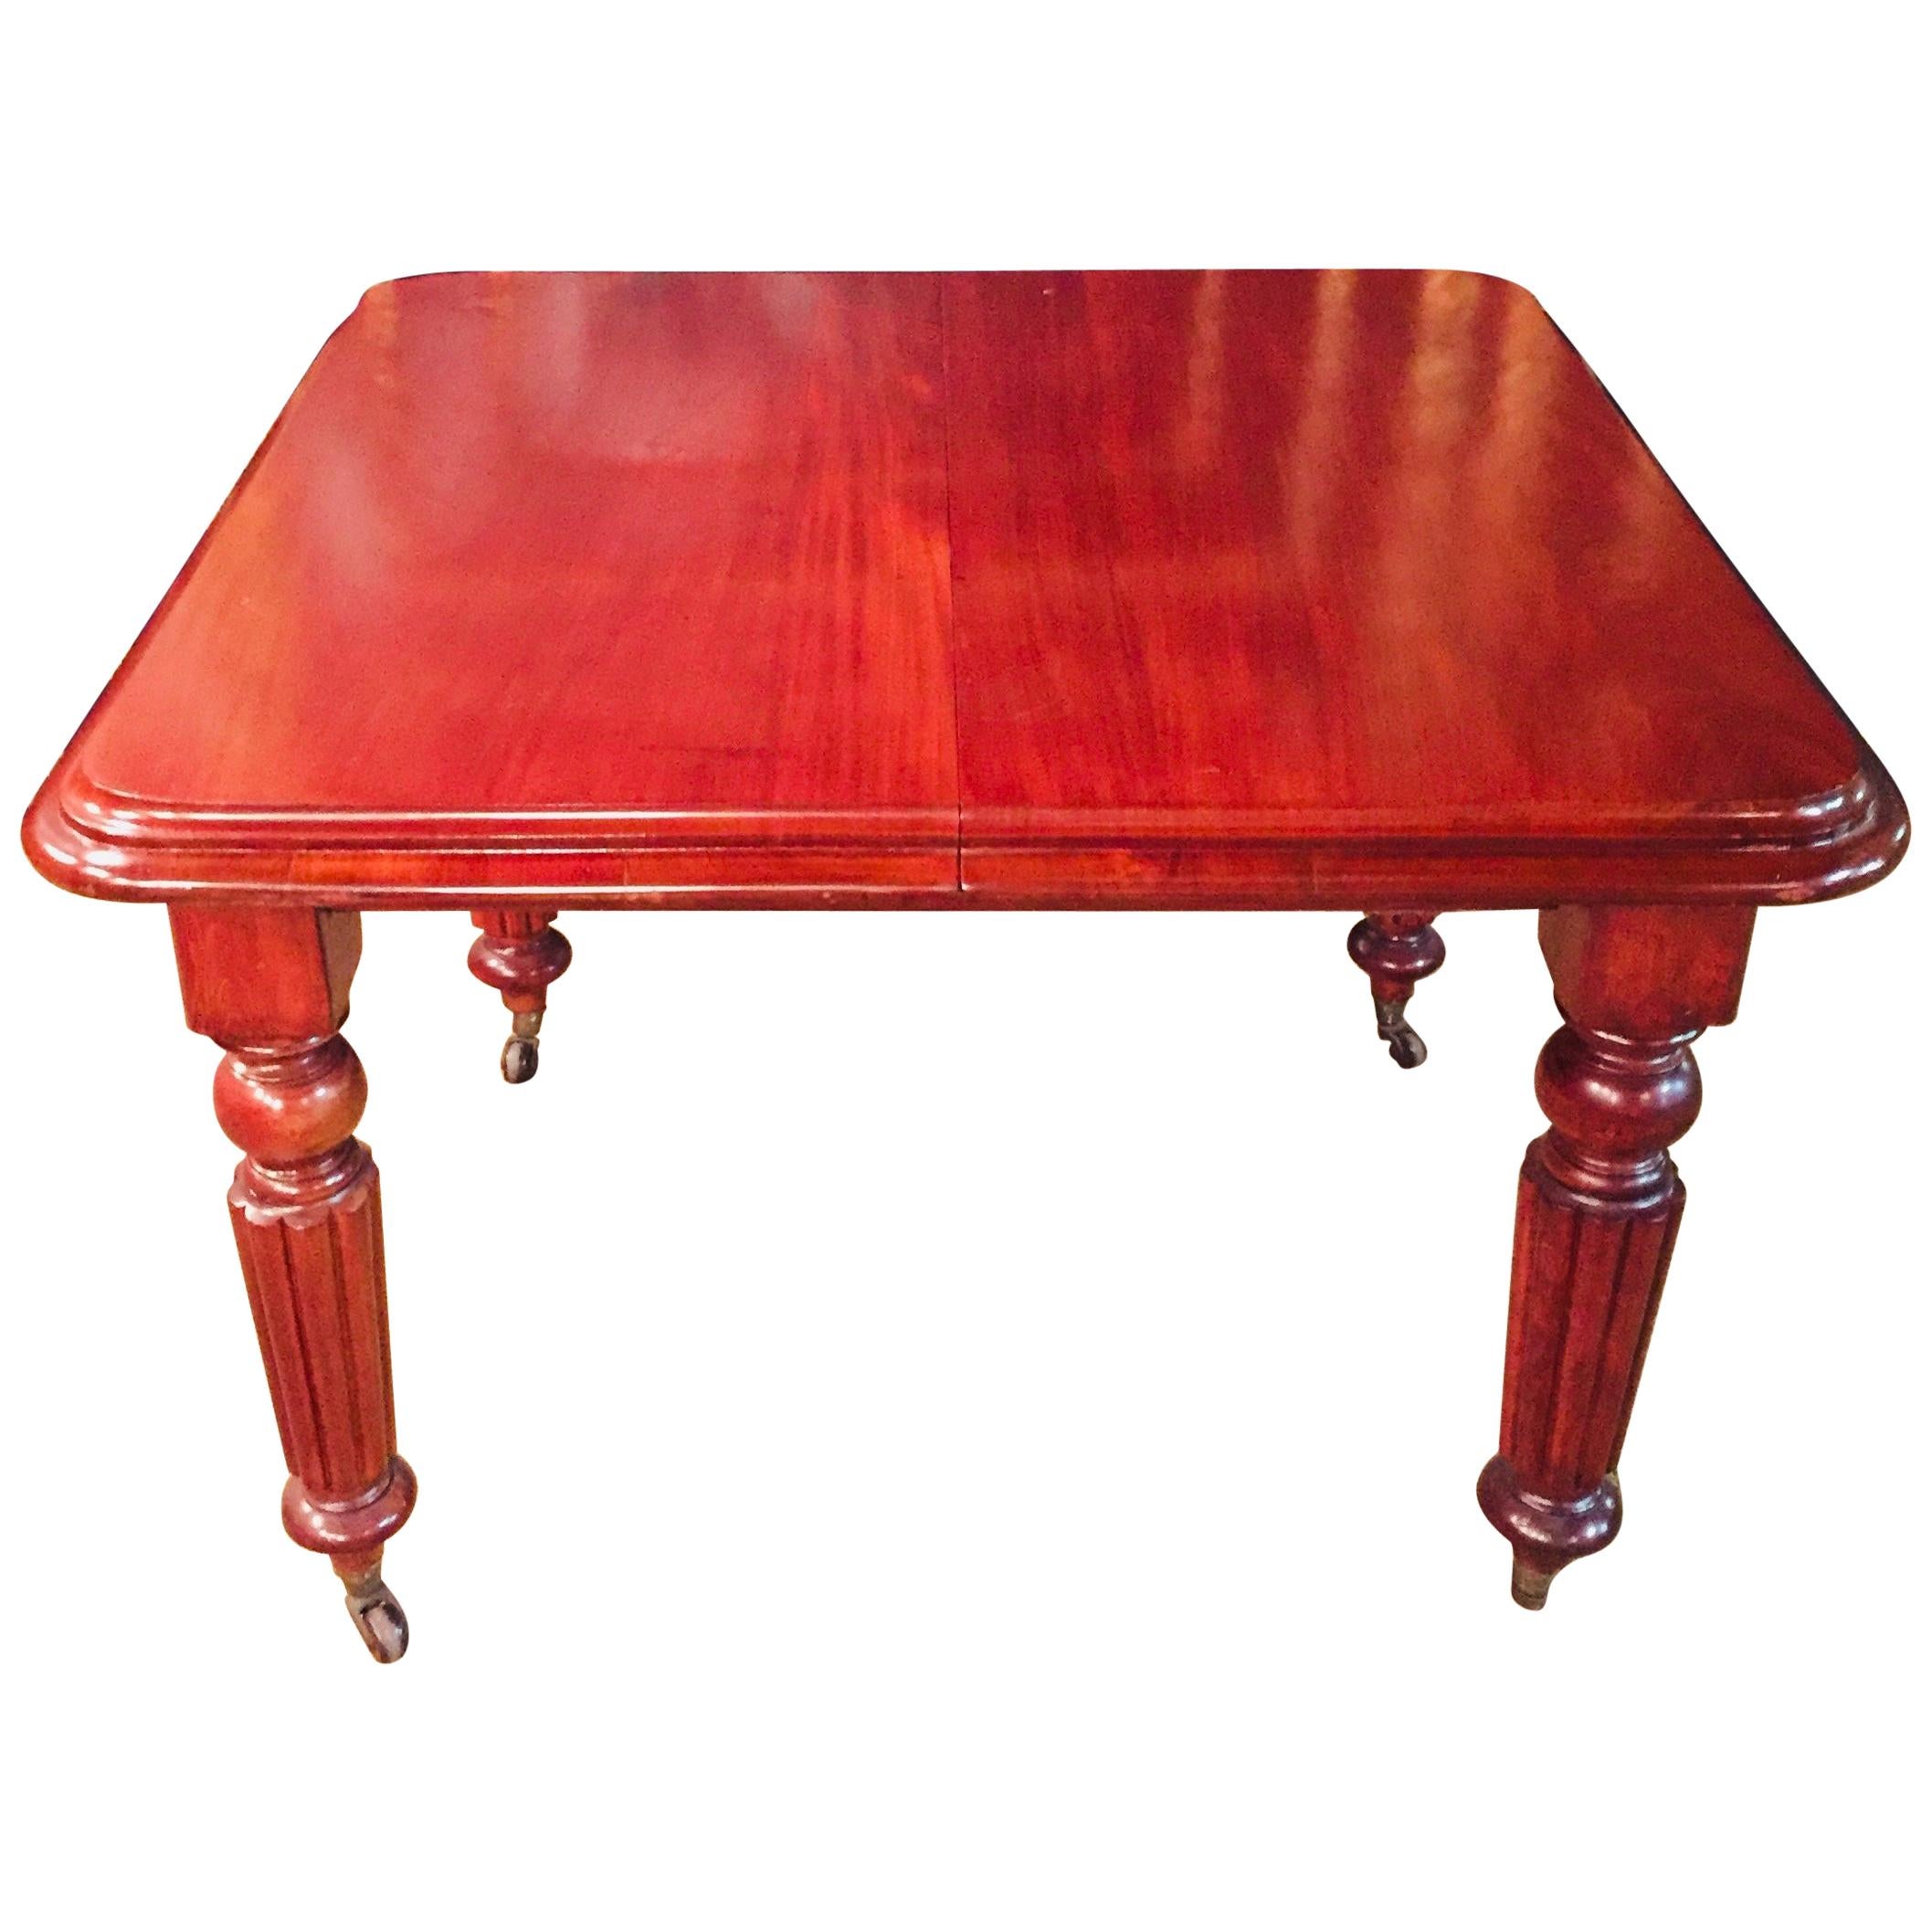 Antique English Table Solid Mahogany polished circa 1850 Joseph Fitter